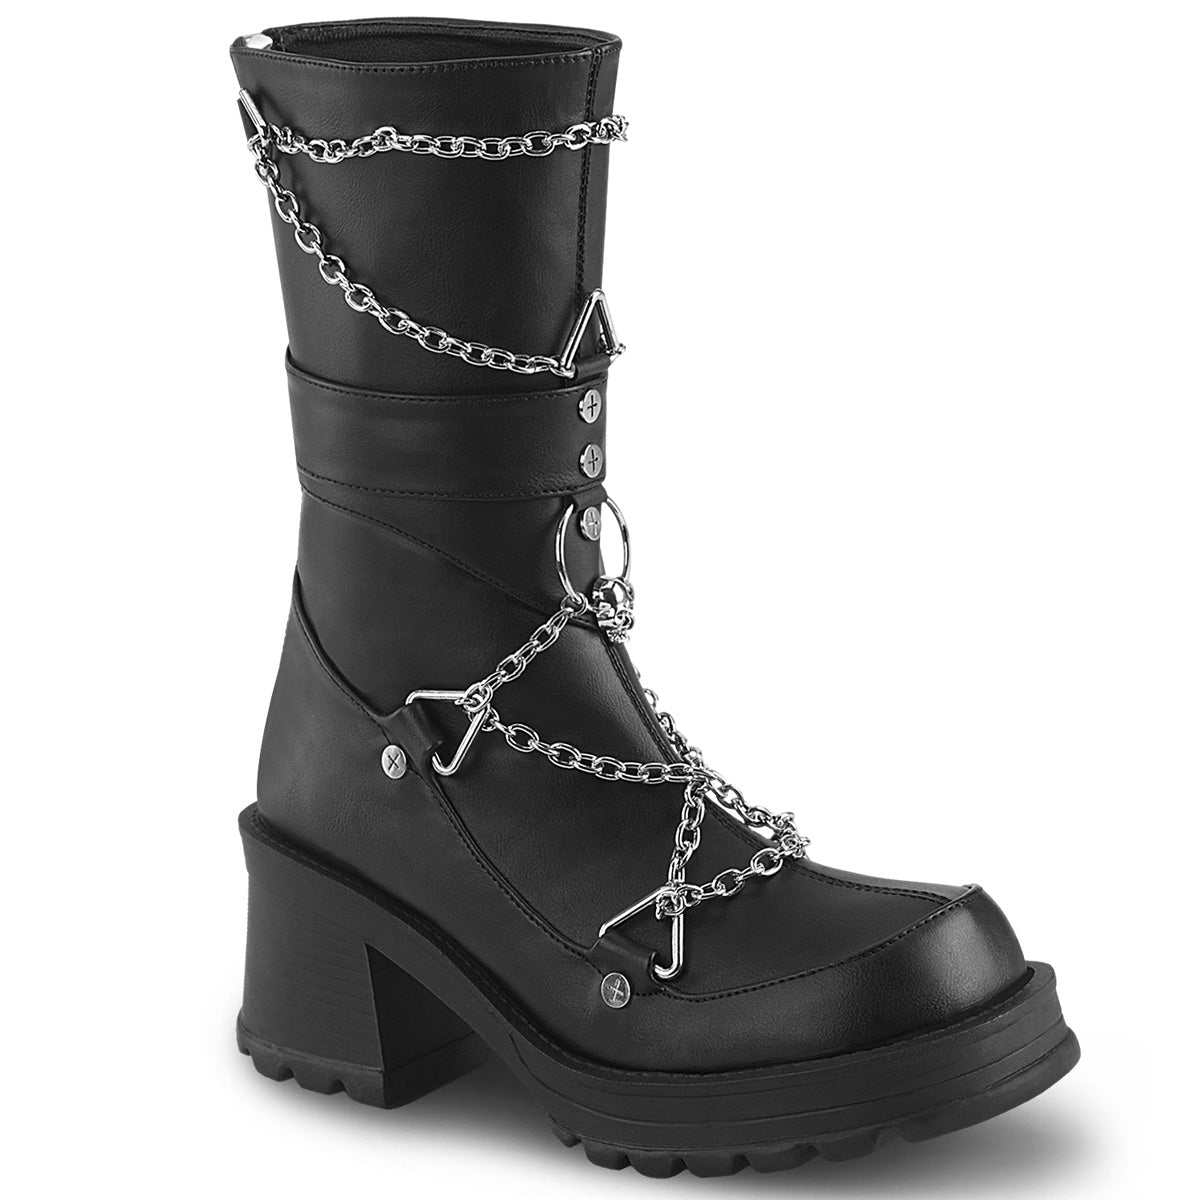 BRATTY-120 Alternative Footwear Demonia Women's Mid-Calf & Knee High Boots Blk Vegan Leather